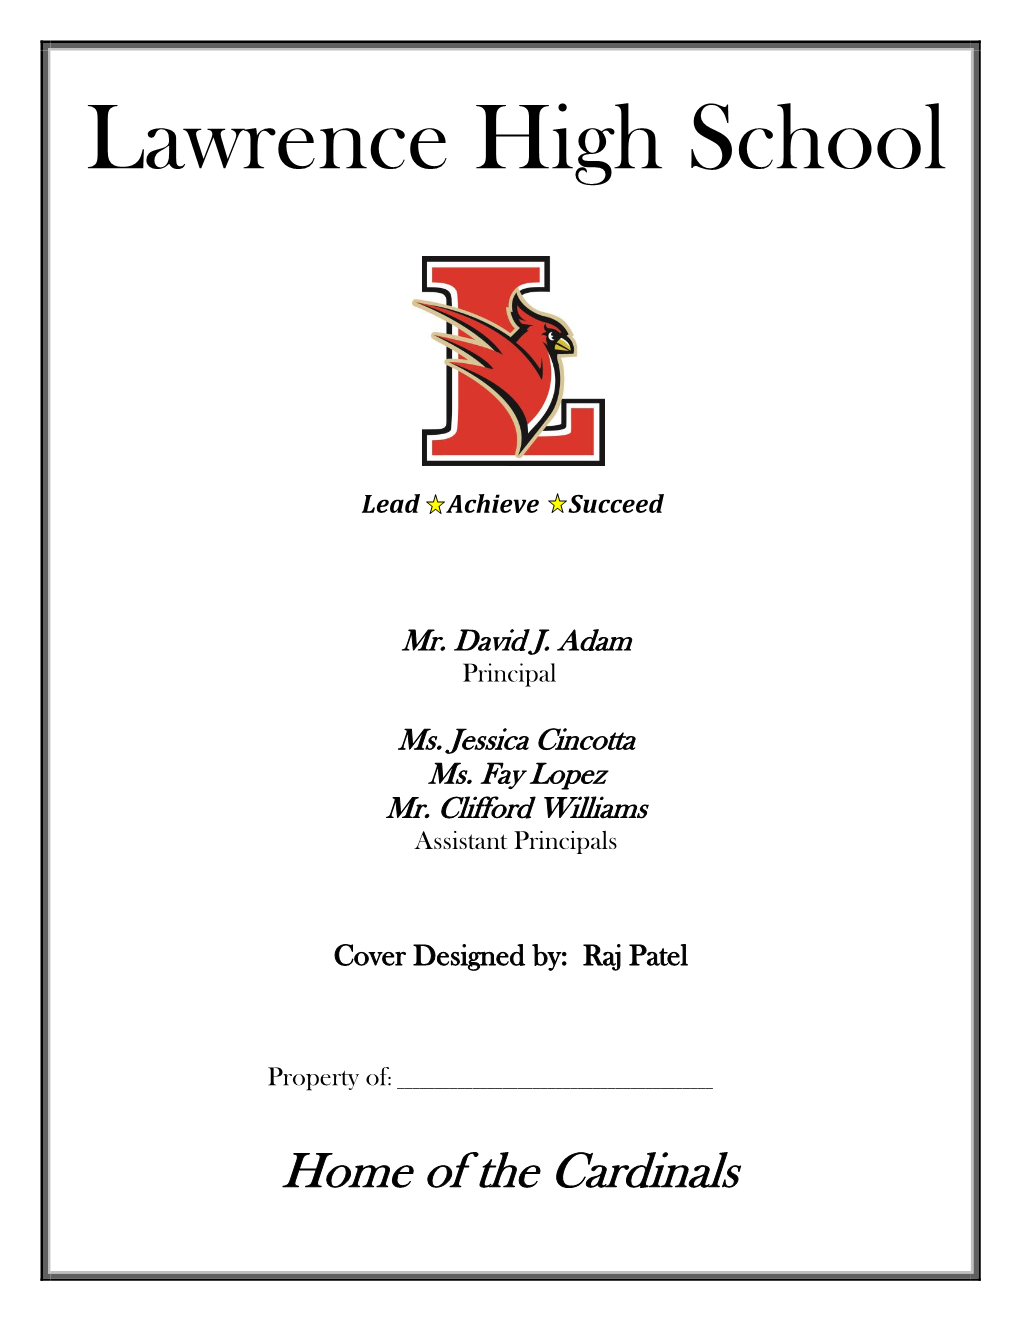 Lawrence High School 2525 Princeton Pike Lawrenceville, NJ 08648 (609) 671-5510